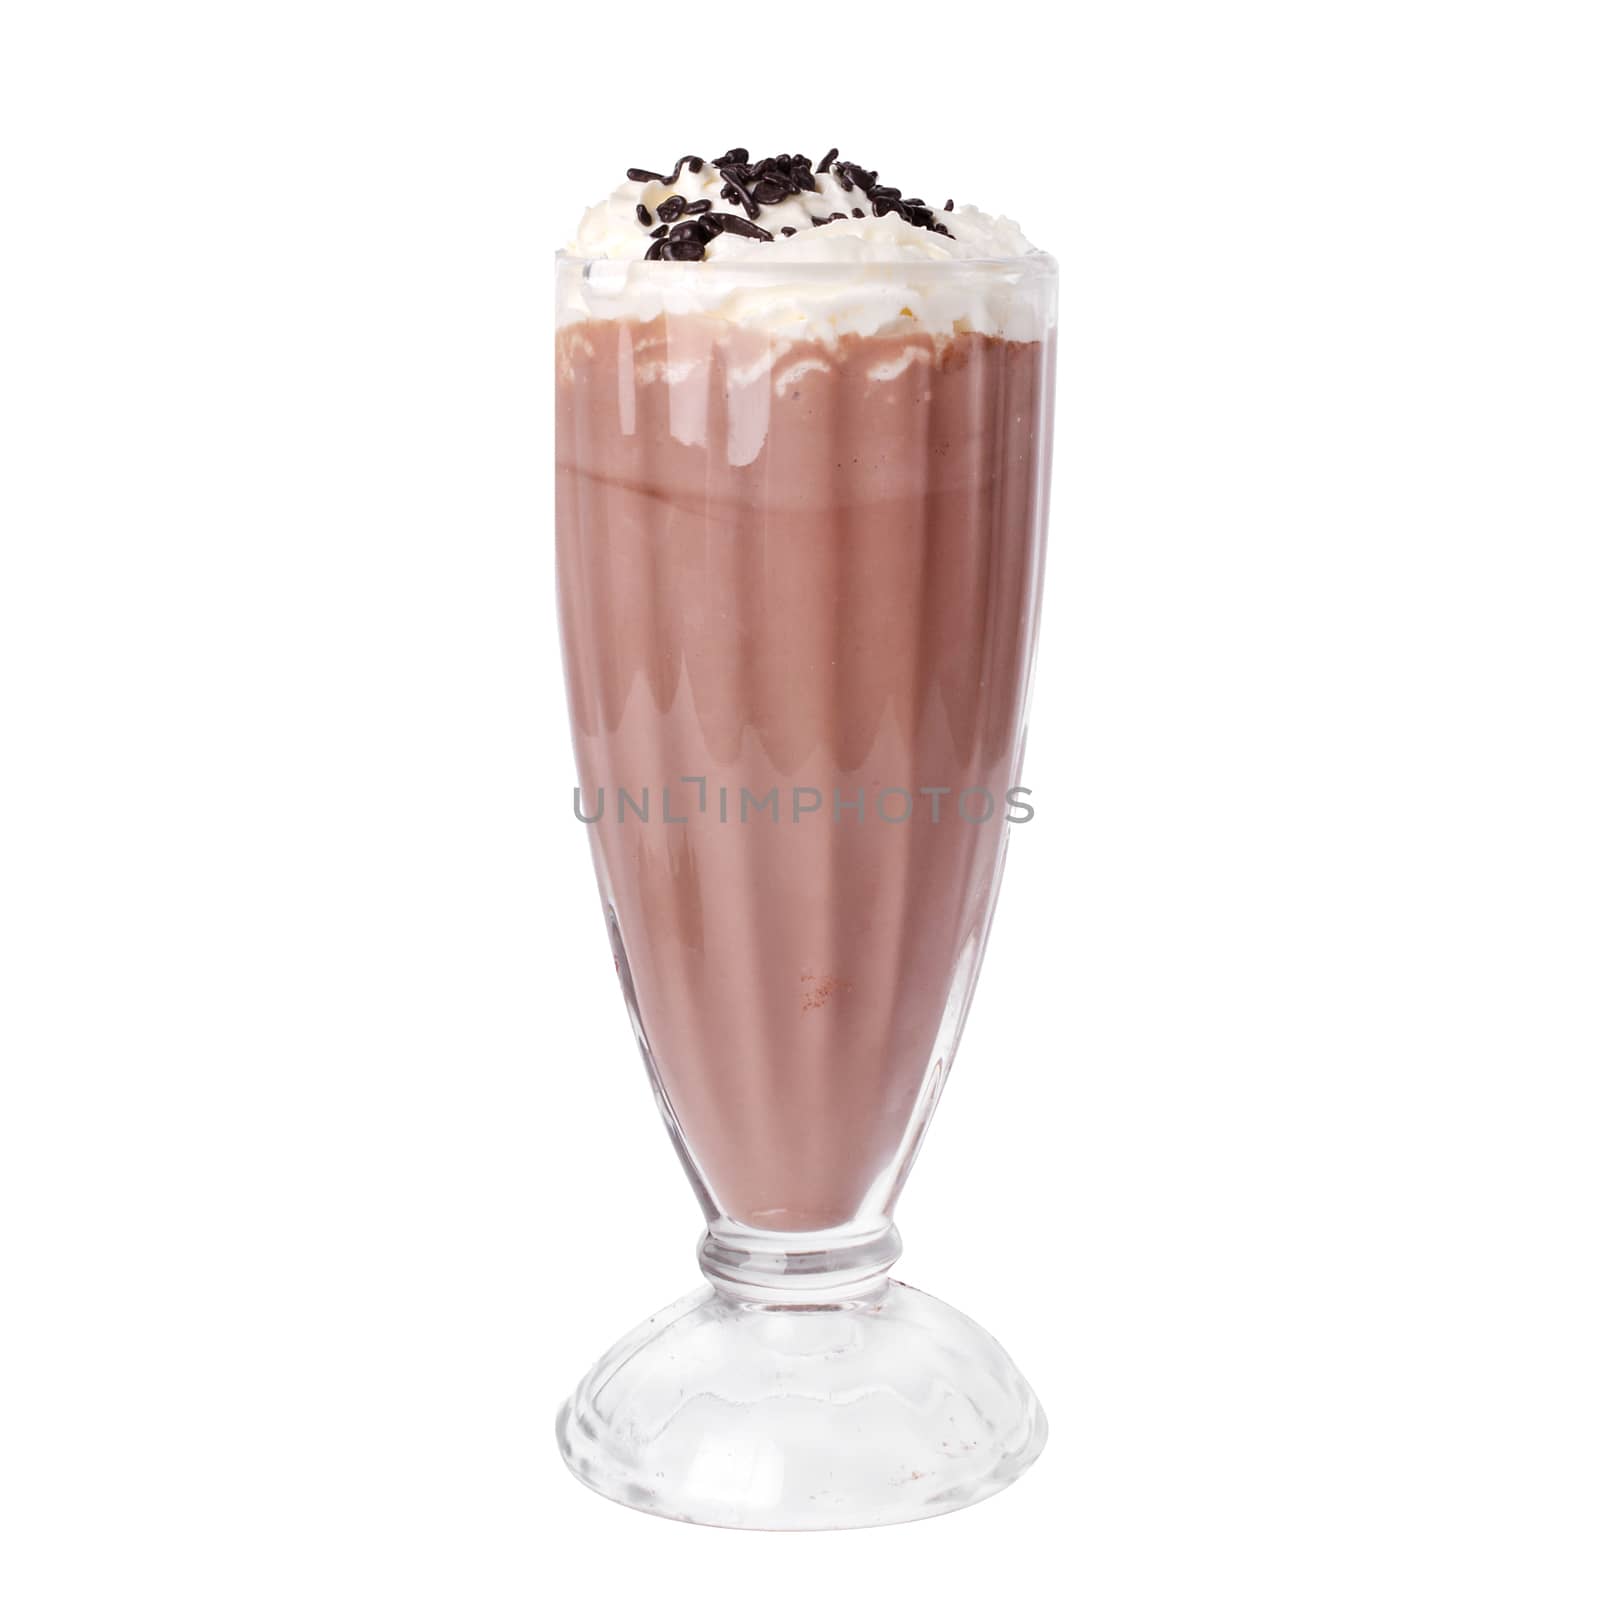 Delicious chocolate milkshake on a white background